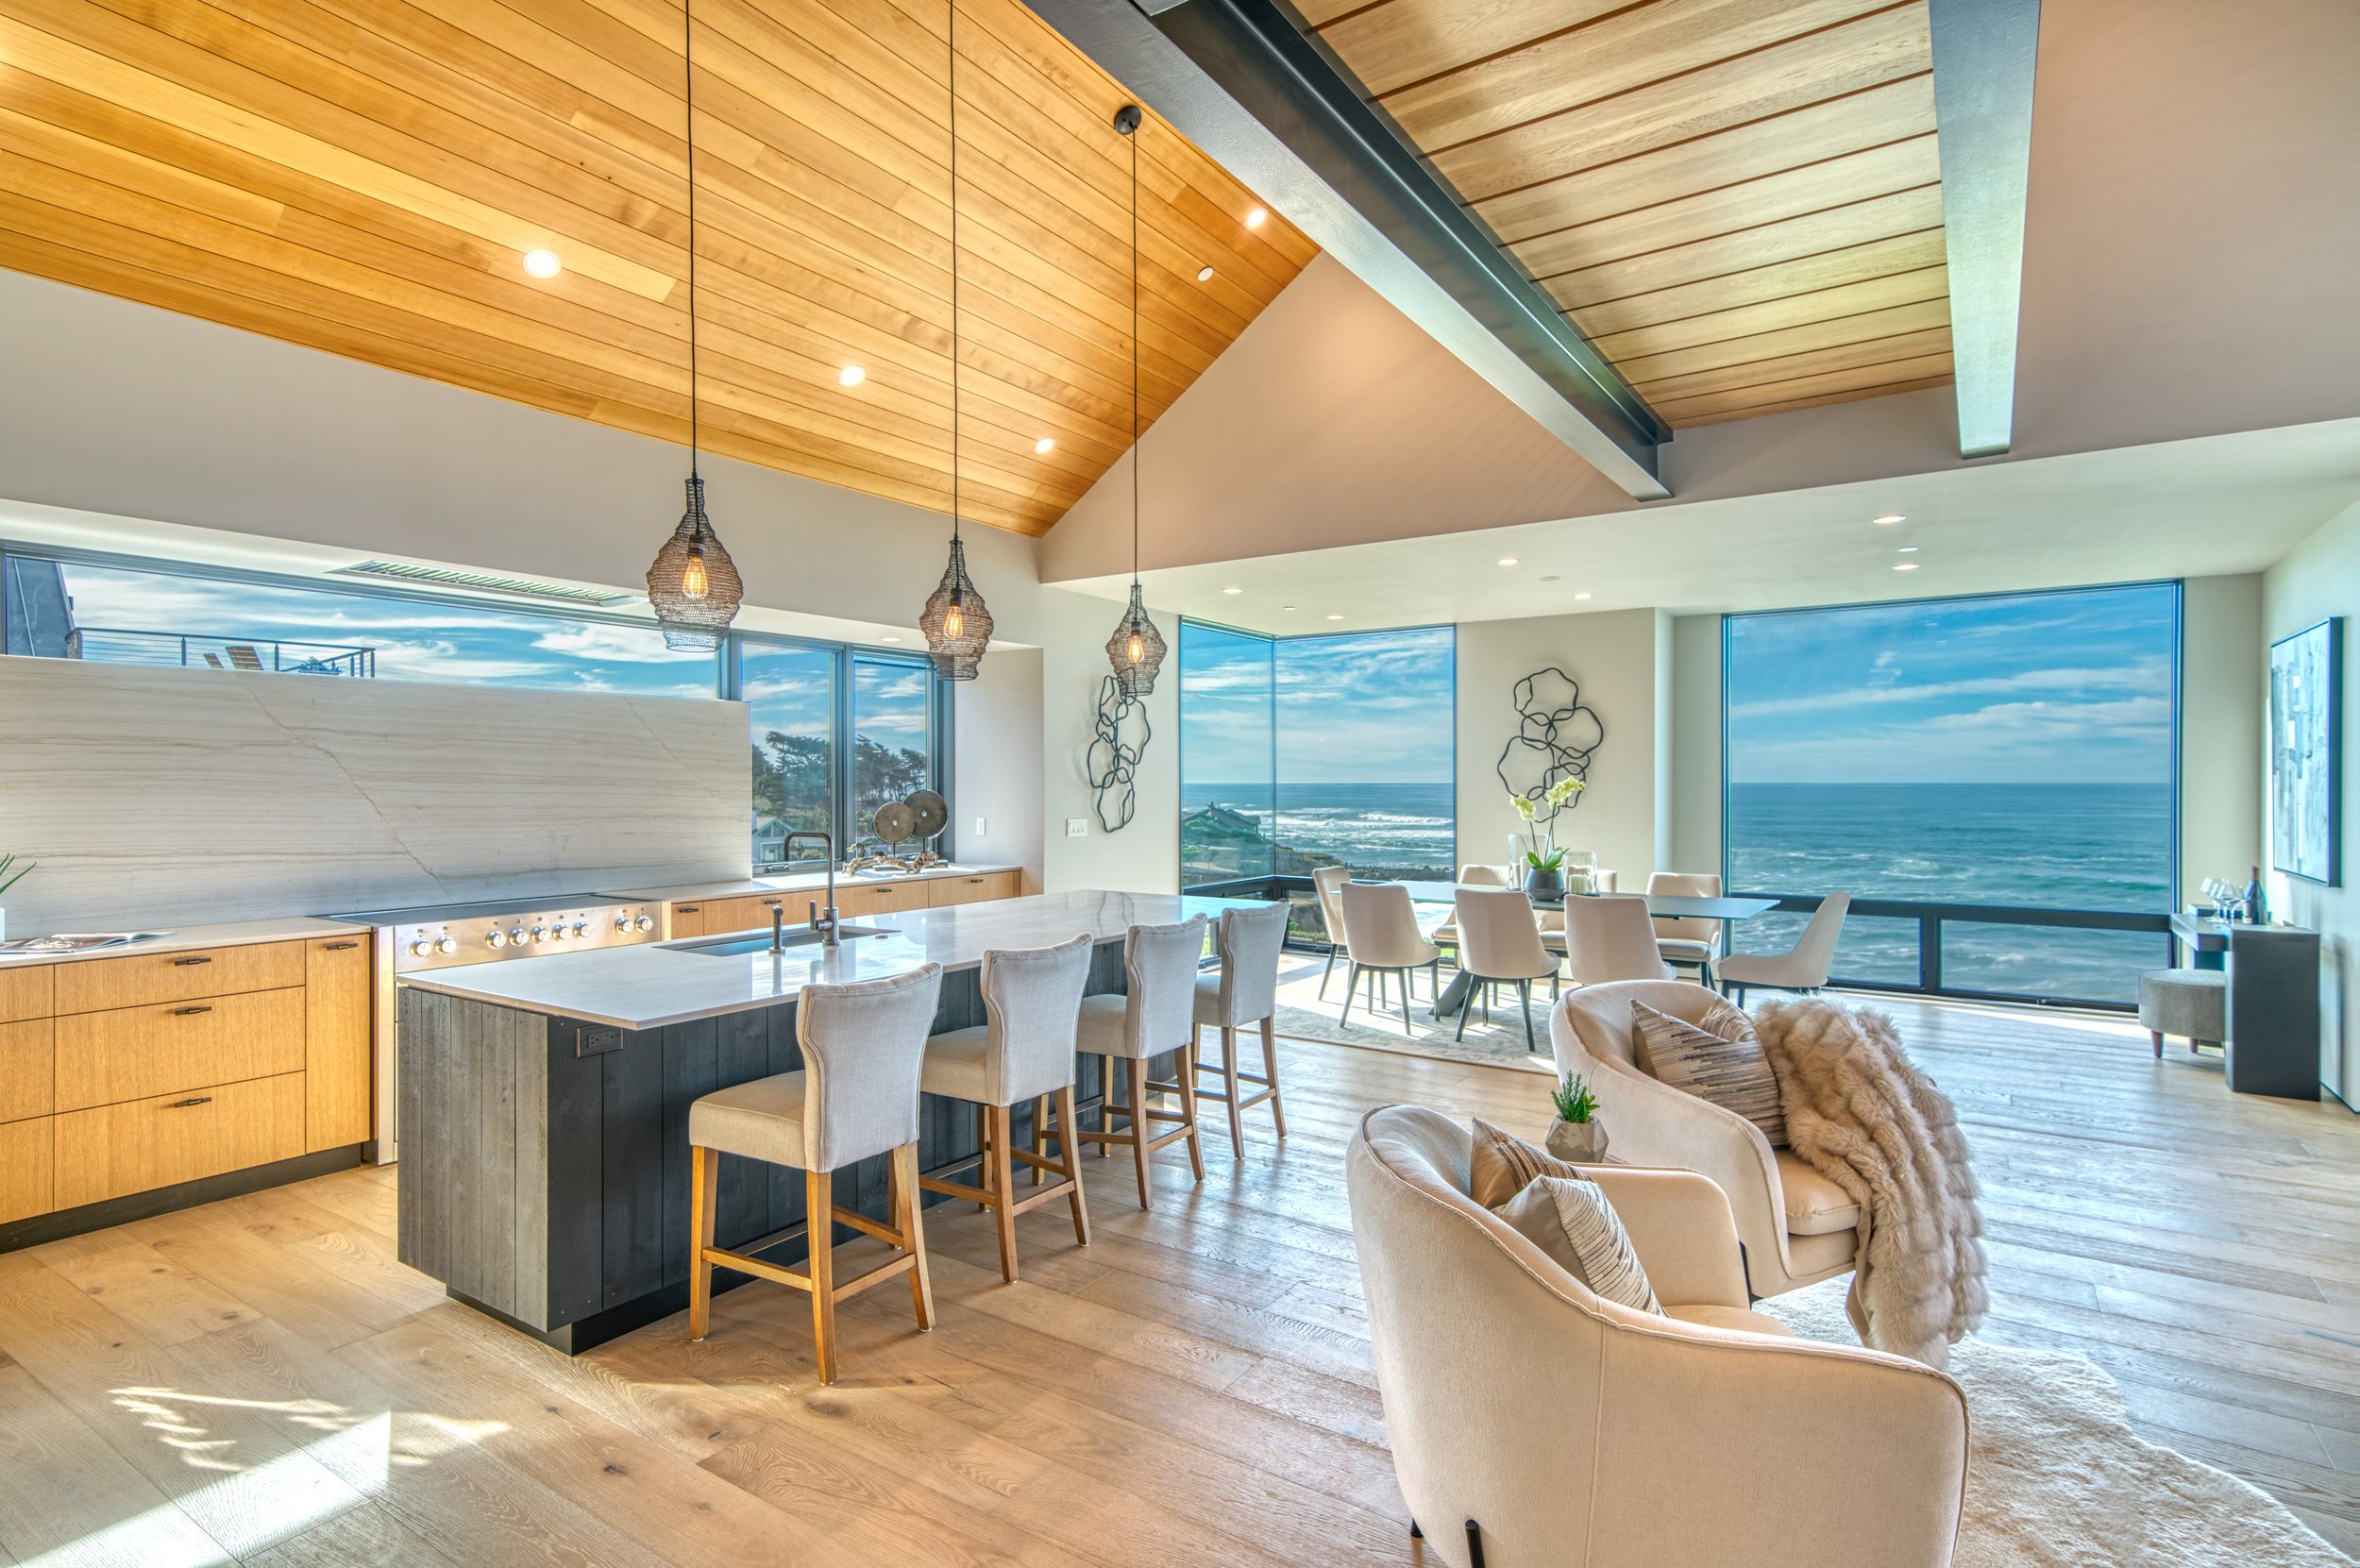 11-kitchen-breakfast-bar-pendant-lights-ocean-views.jpg